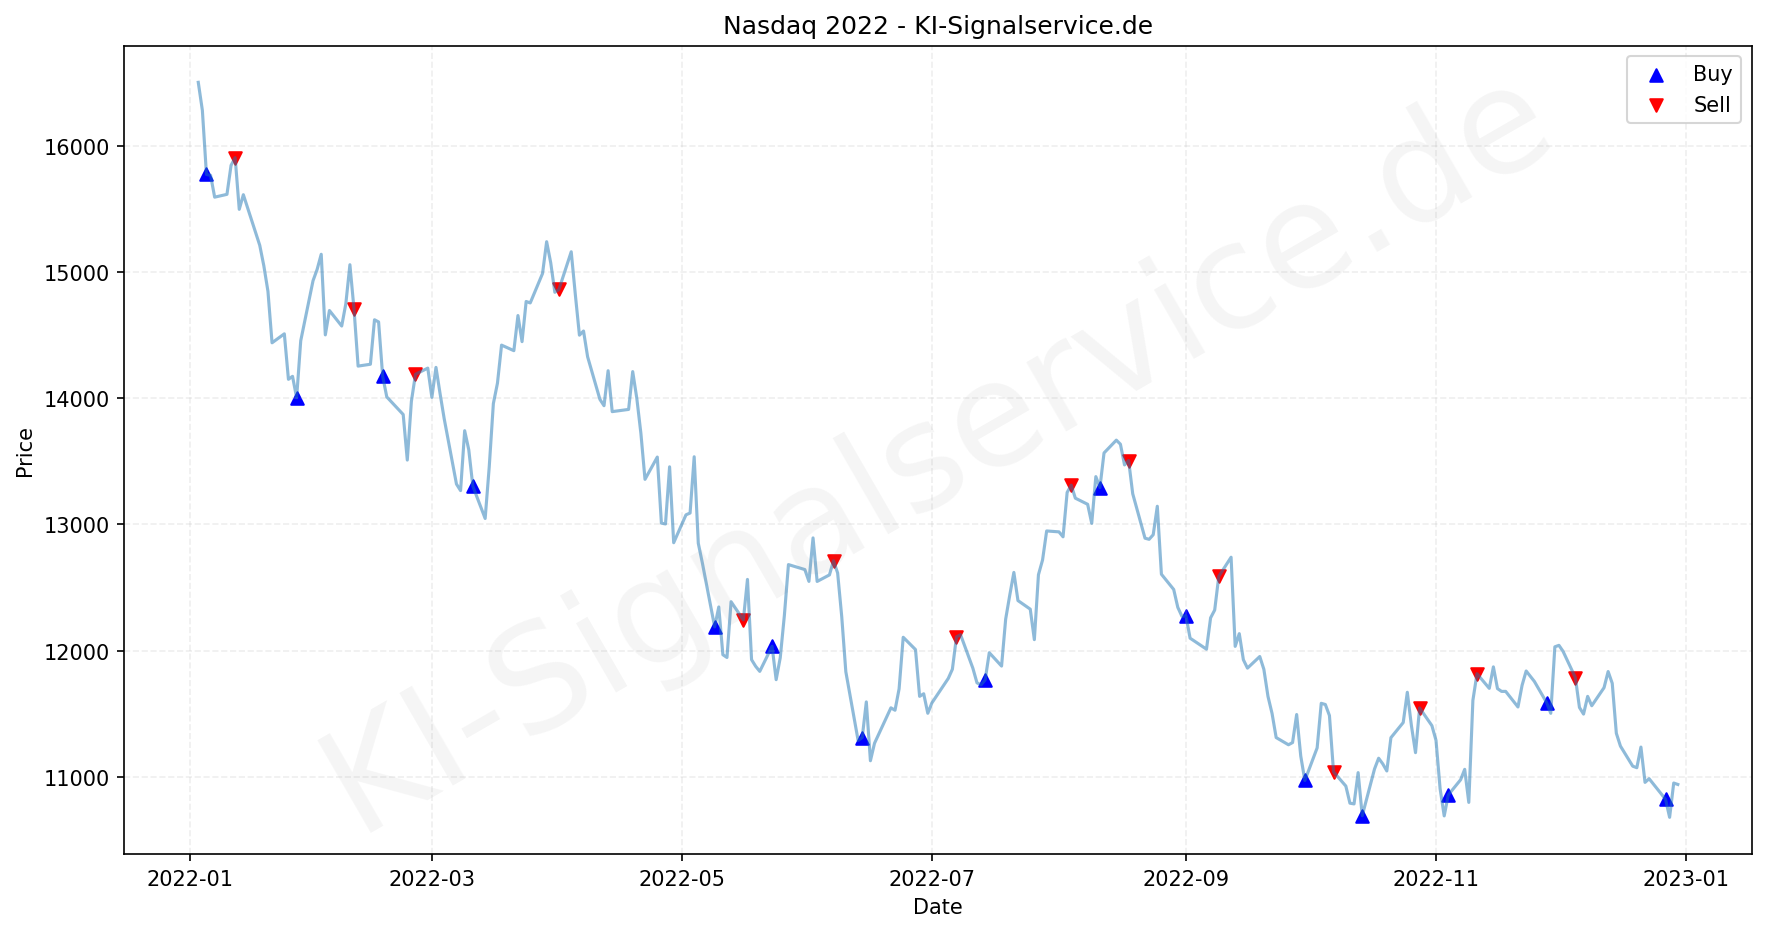 NASDAQ Index Performance Chart - KI Tradingsignale 2022